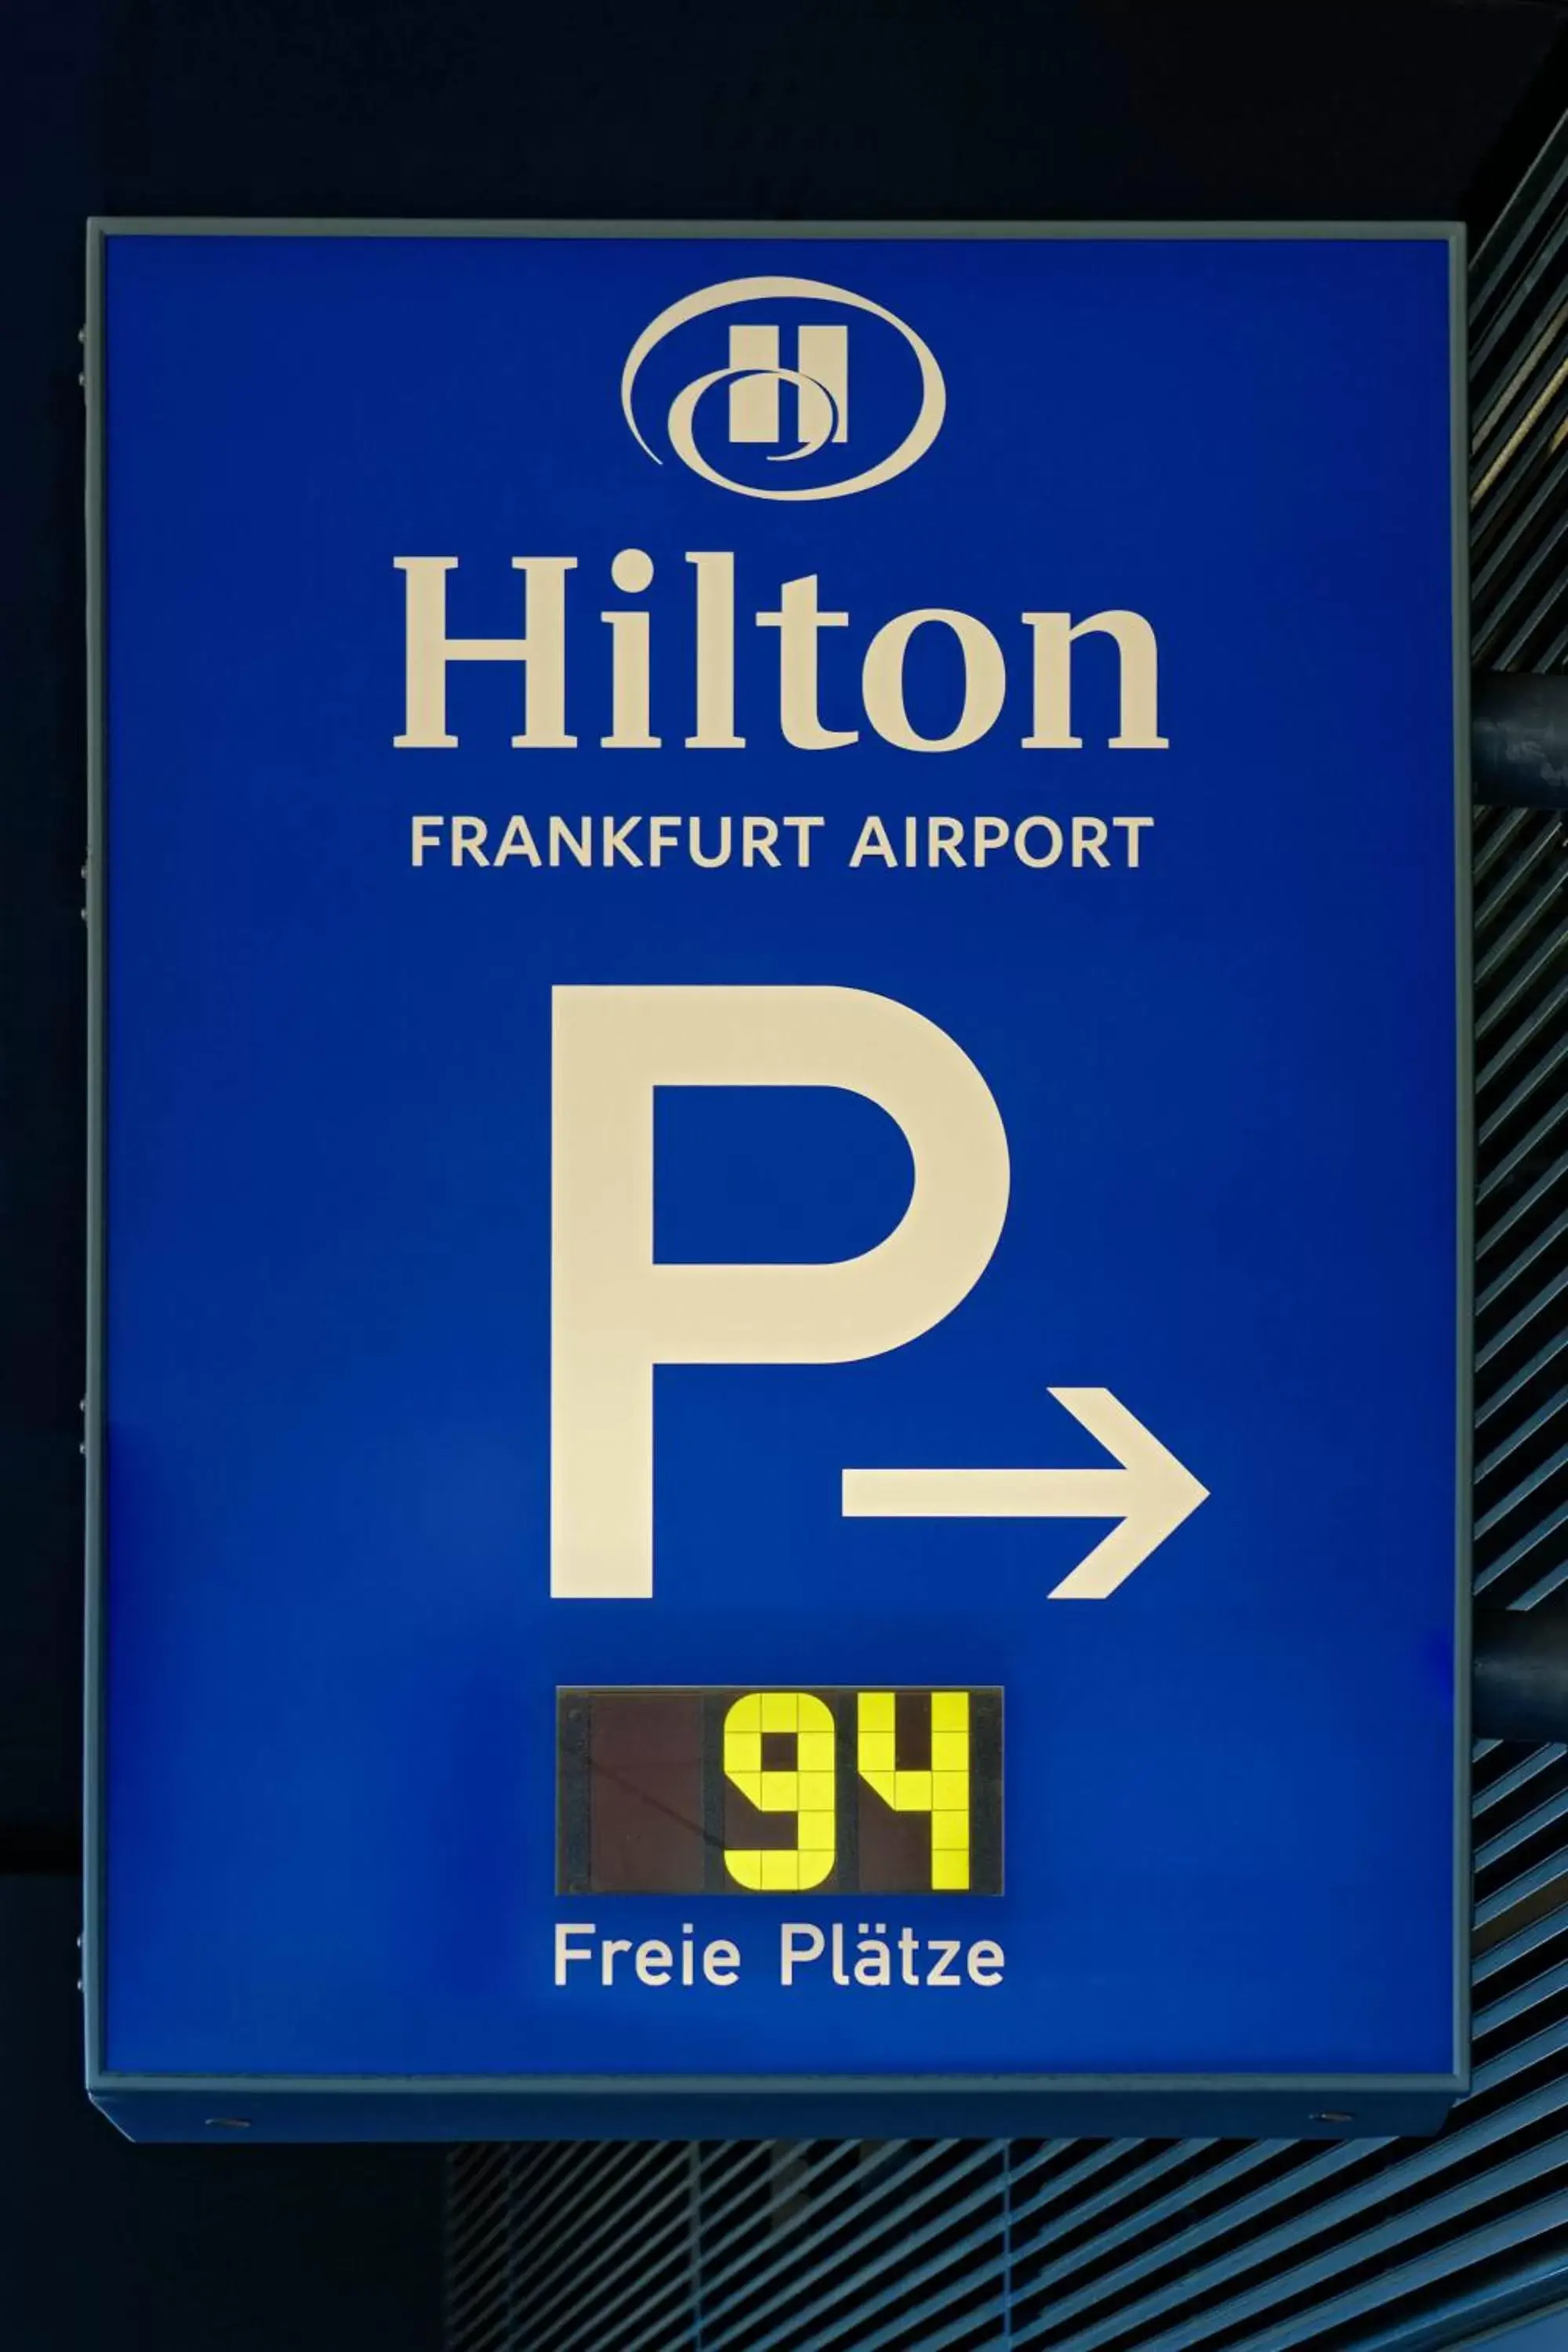 Parking in Hilton Frankfurt Airport